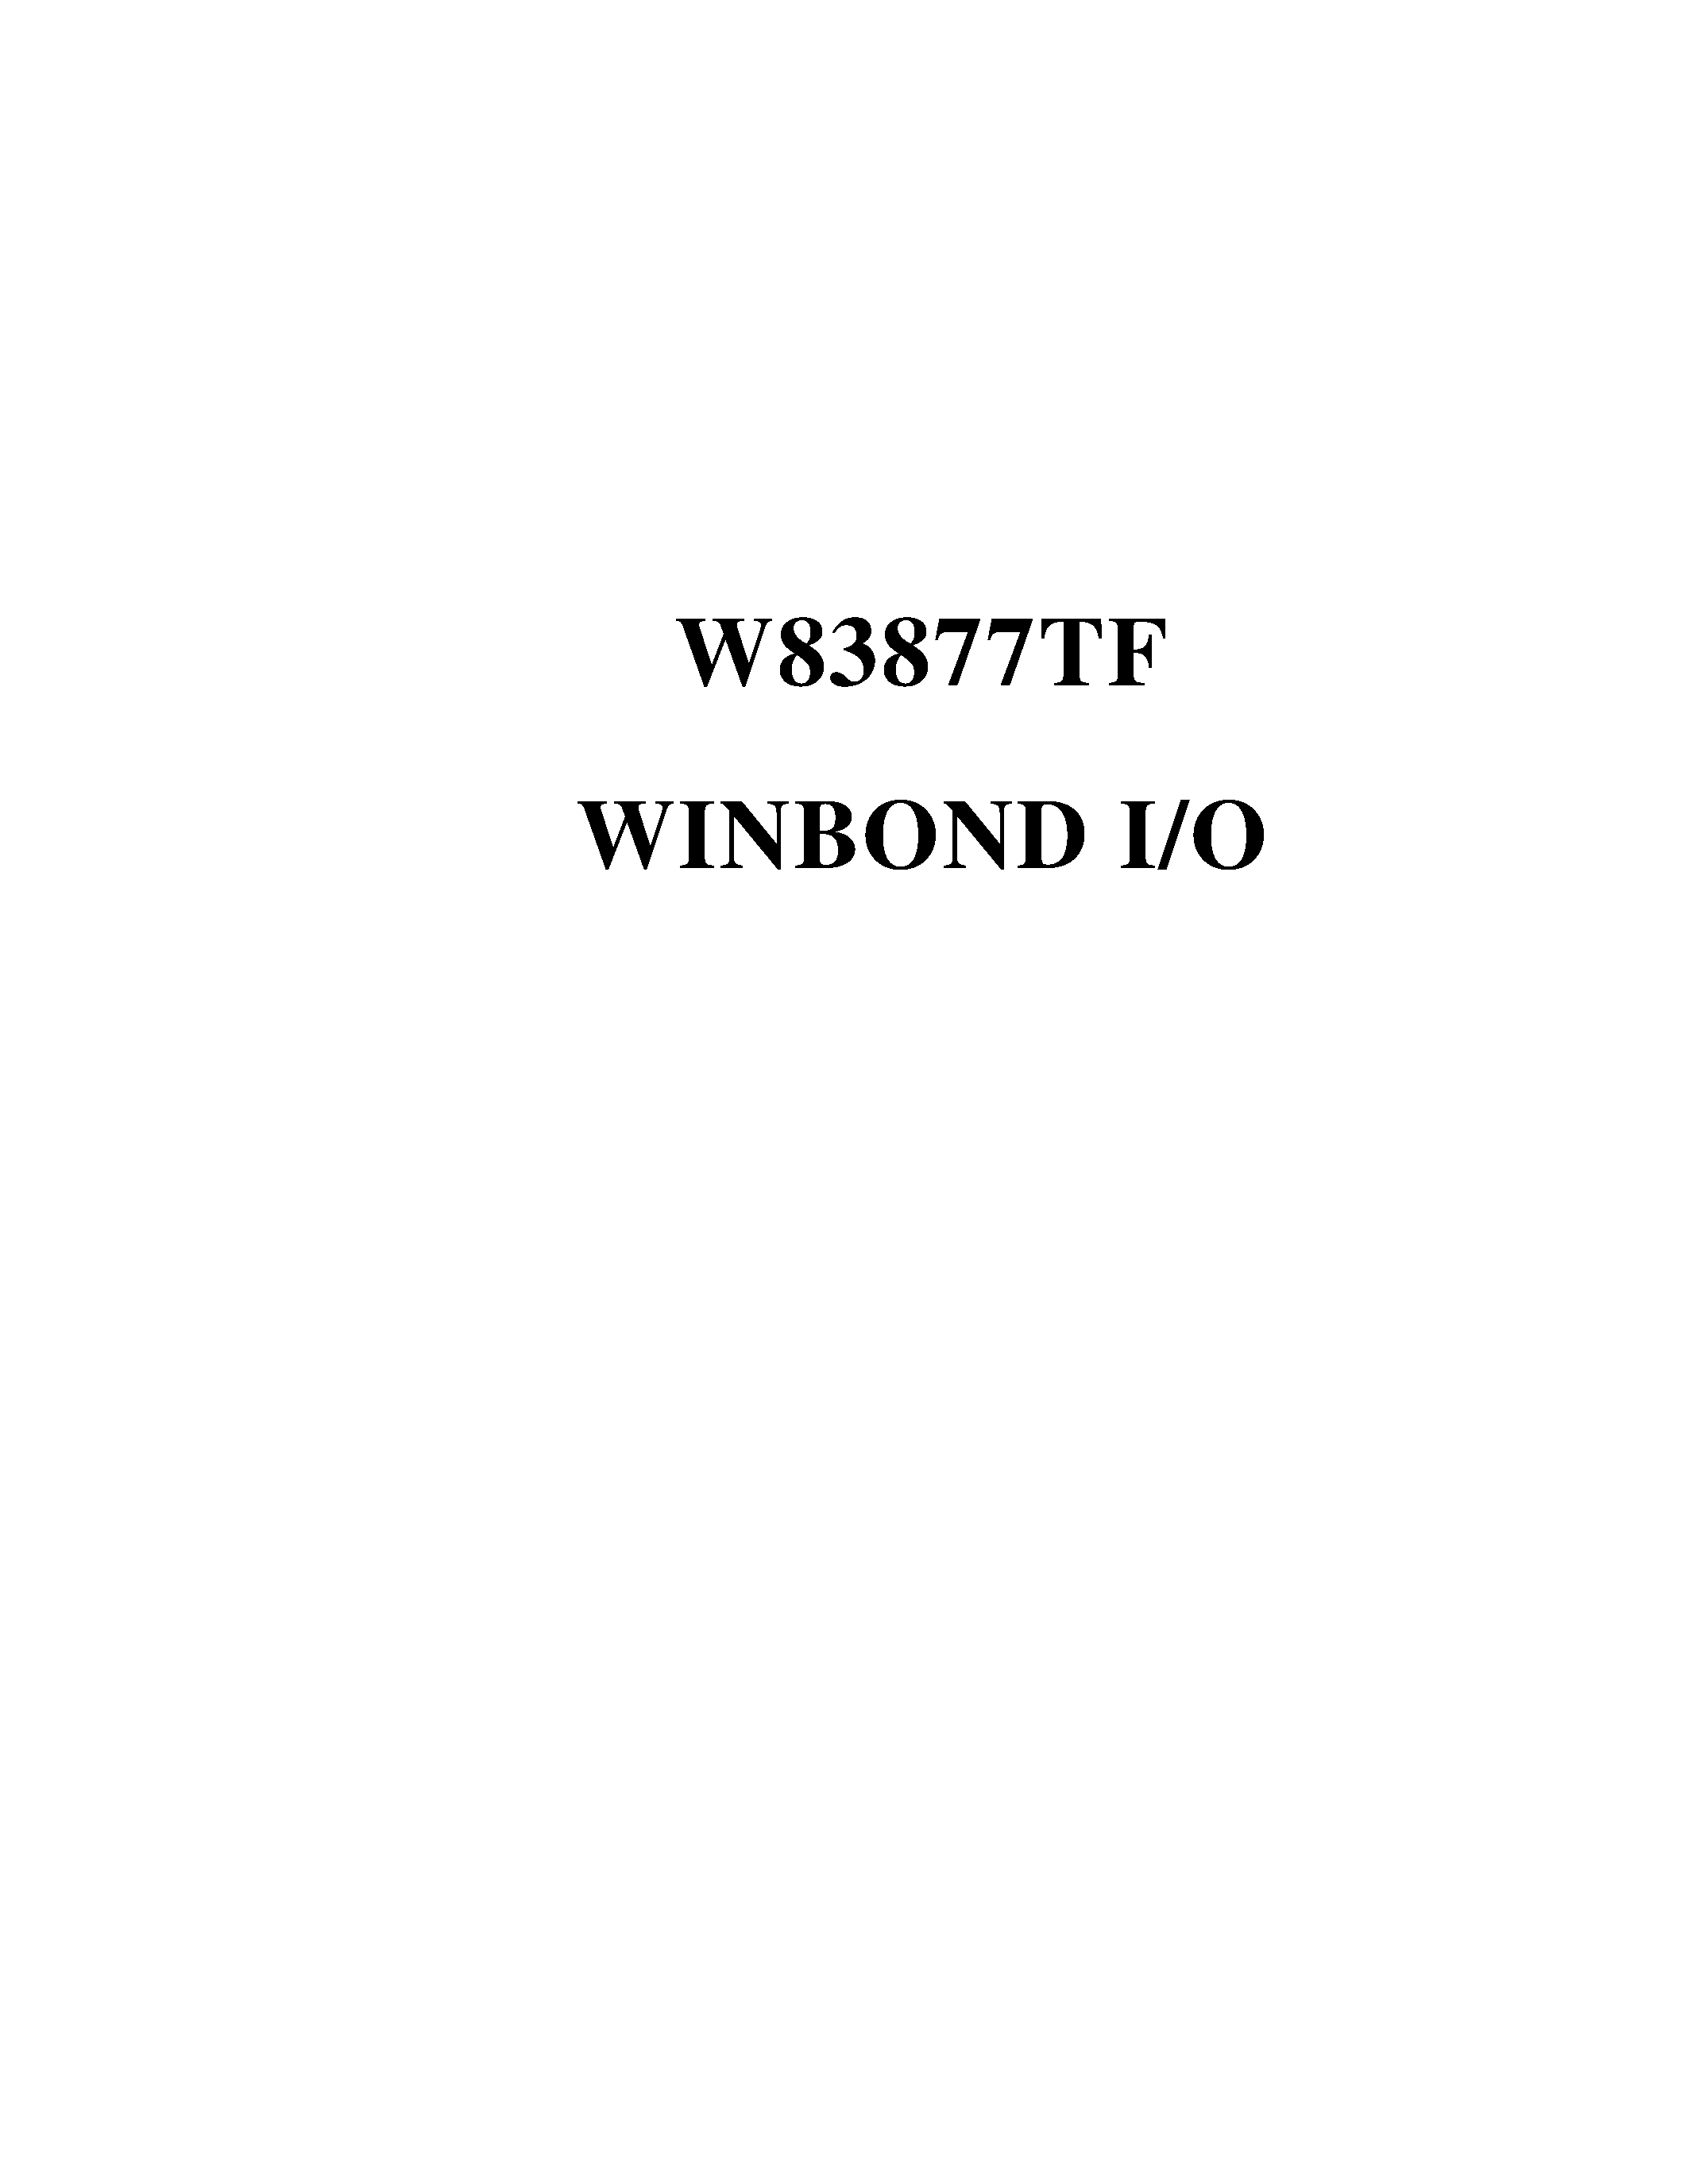 Даташит W83977TF - WINBOND I/O страница 1